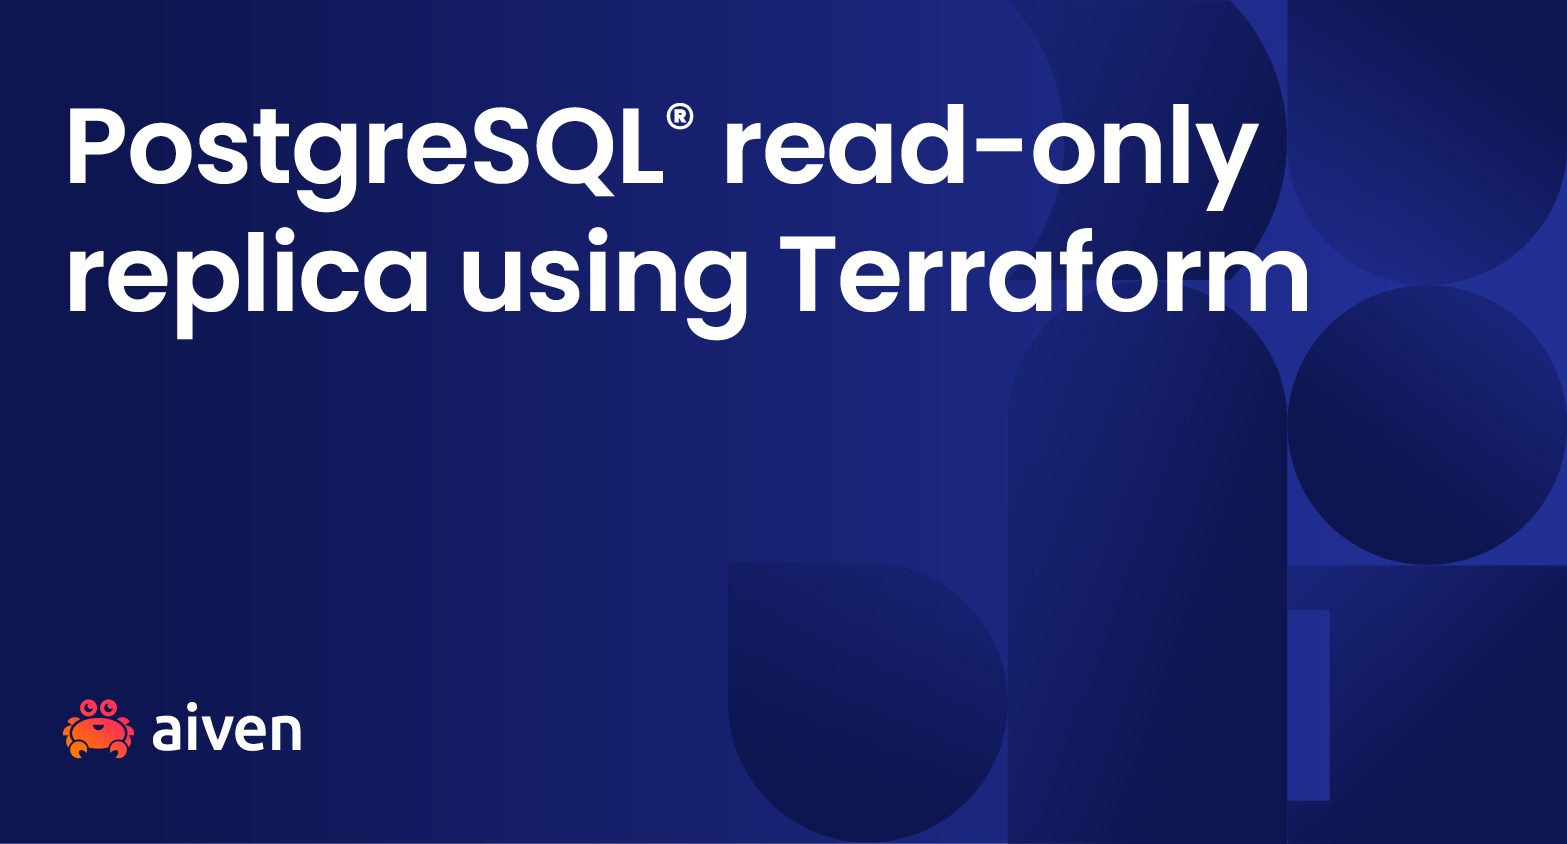 PostgreSQL® read-only replica using Terraform illustration